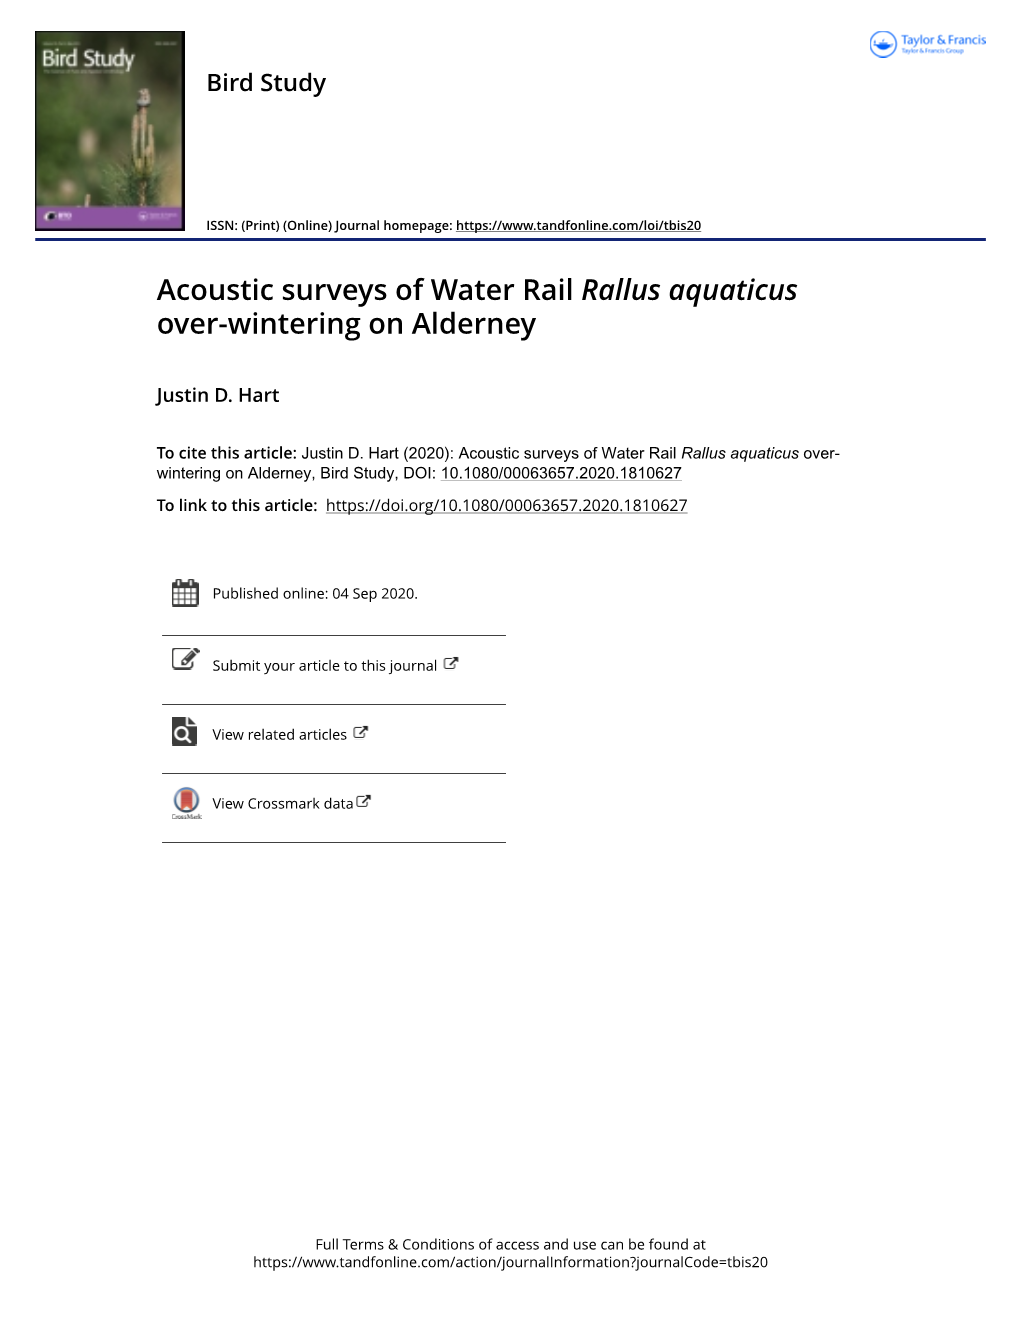 Acoustic Surveys of Water Rail Rallus Aquaticus Over-Wintering on Alderney